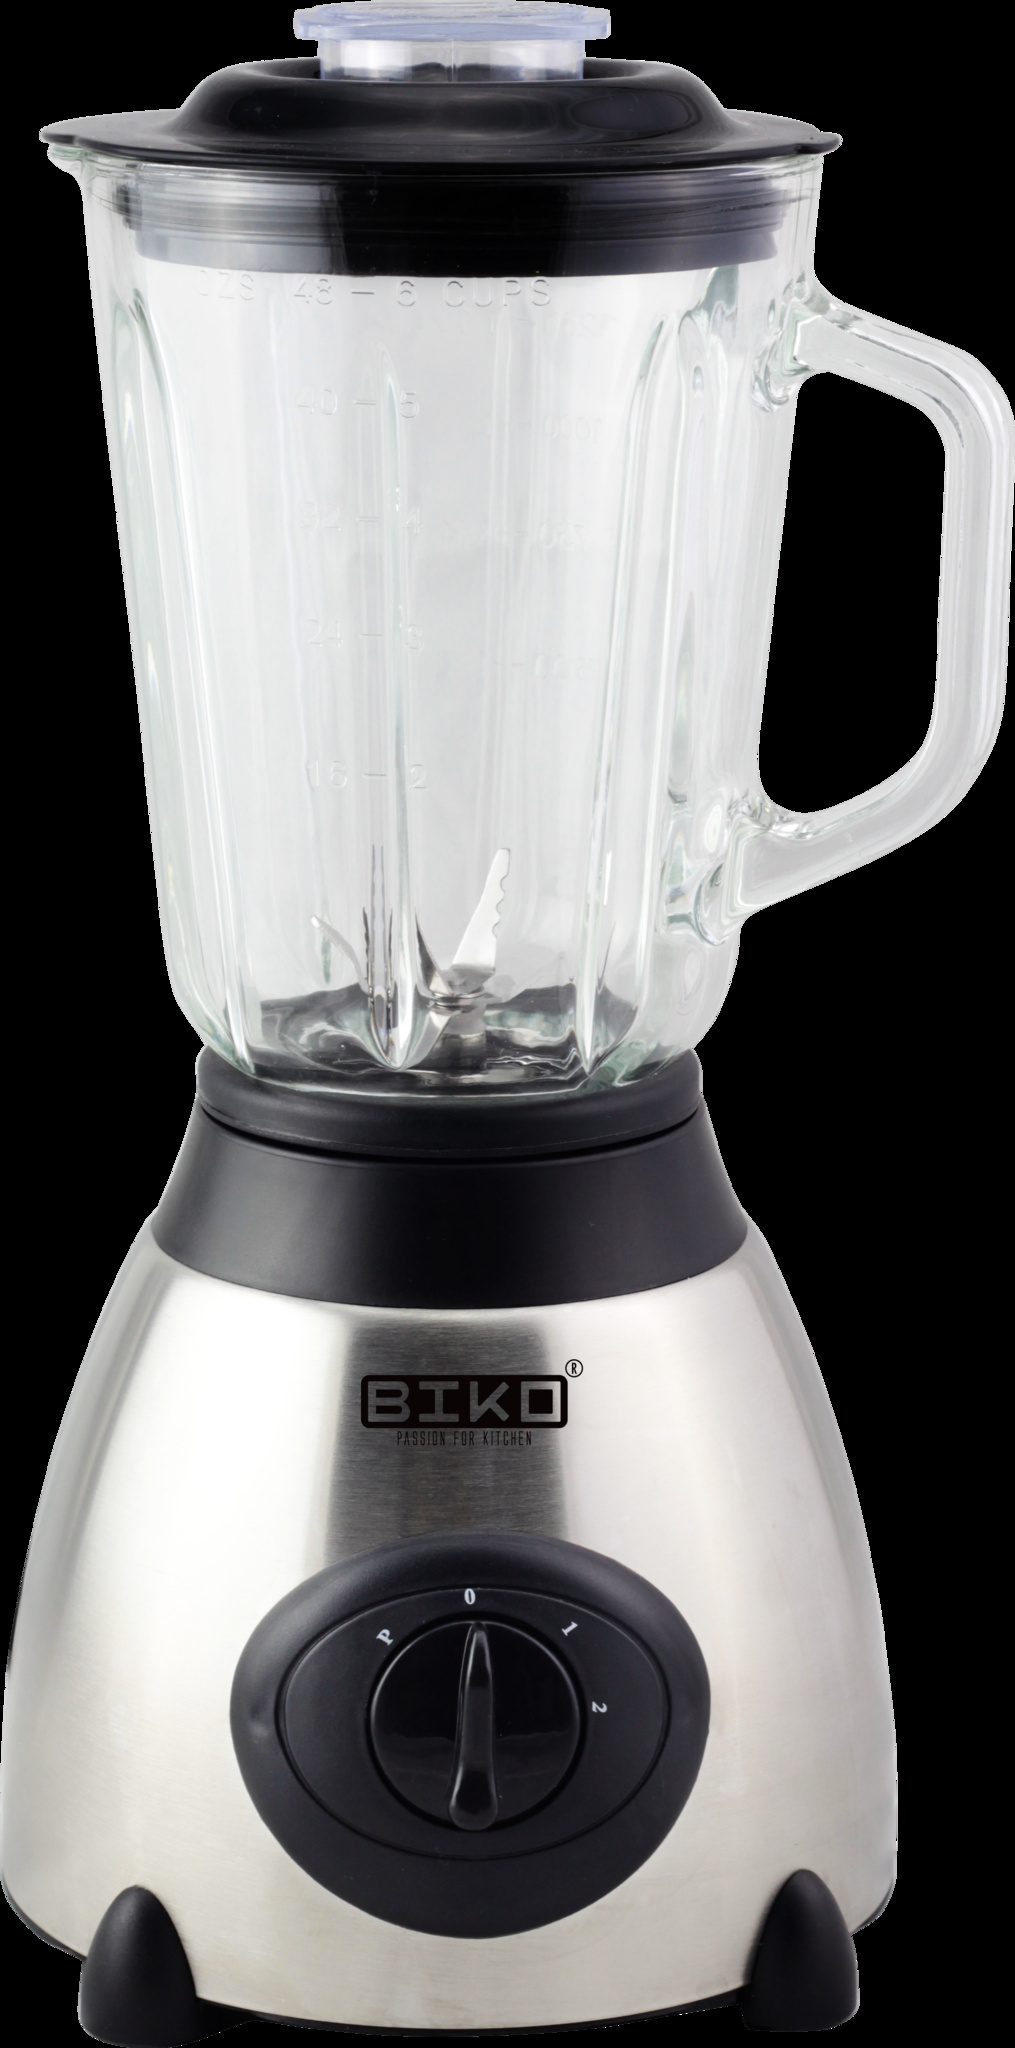 BIKO Luxe Blender - met Glazen Kan - 1.5L - 800W - RVS